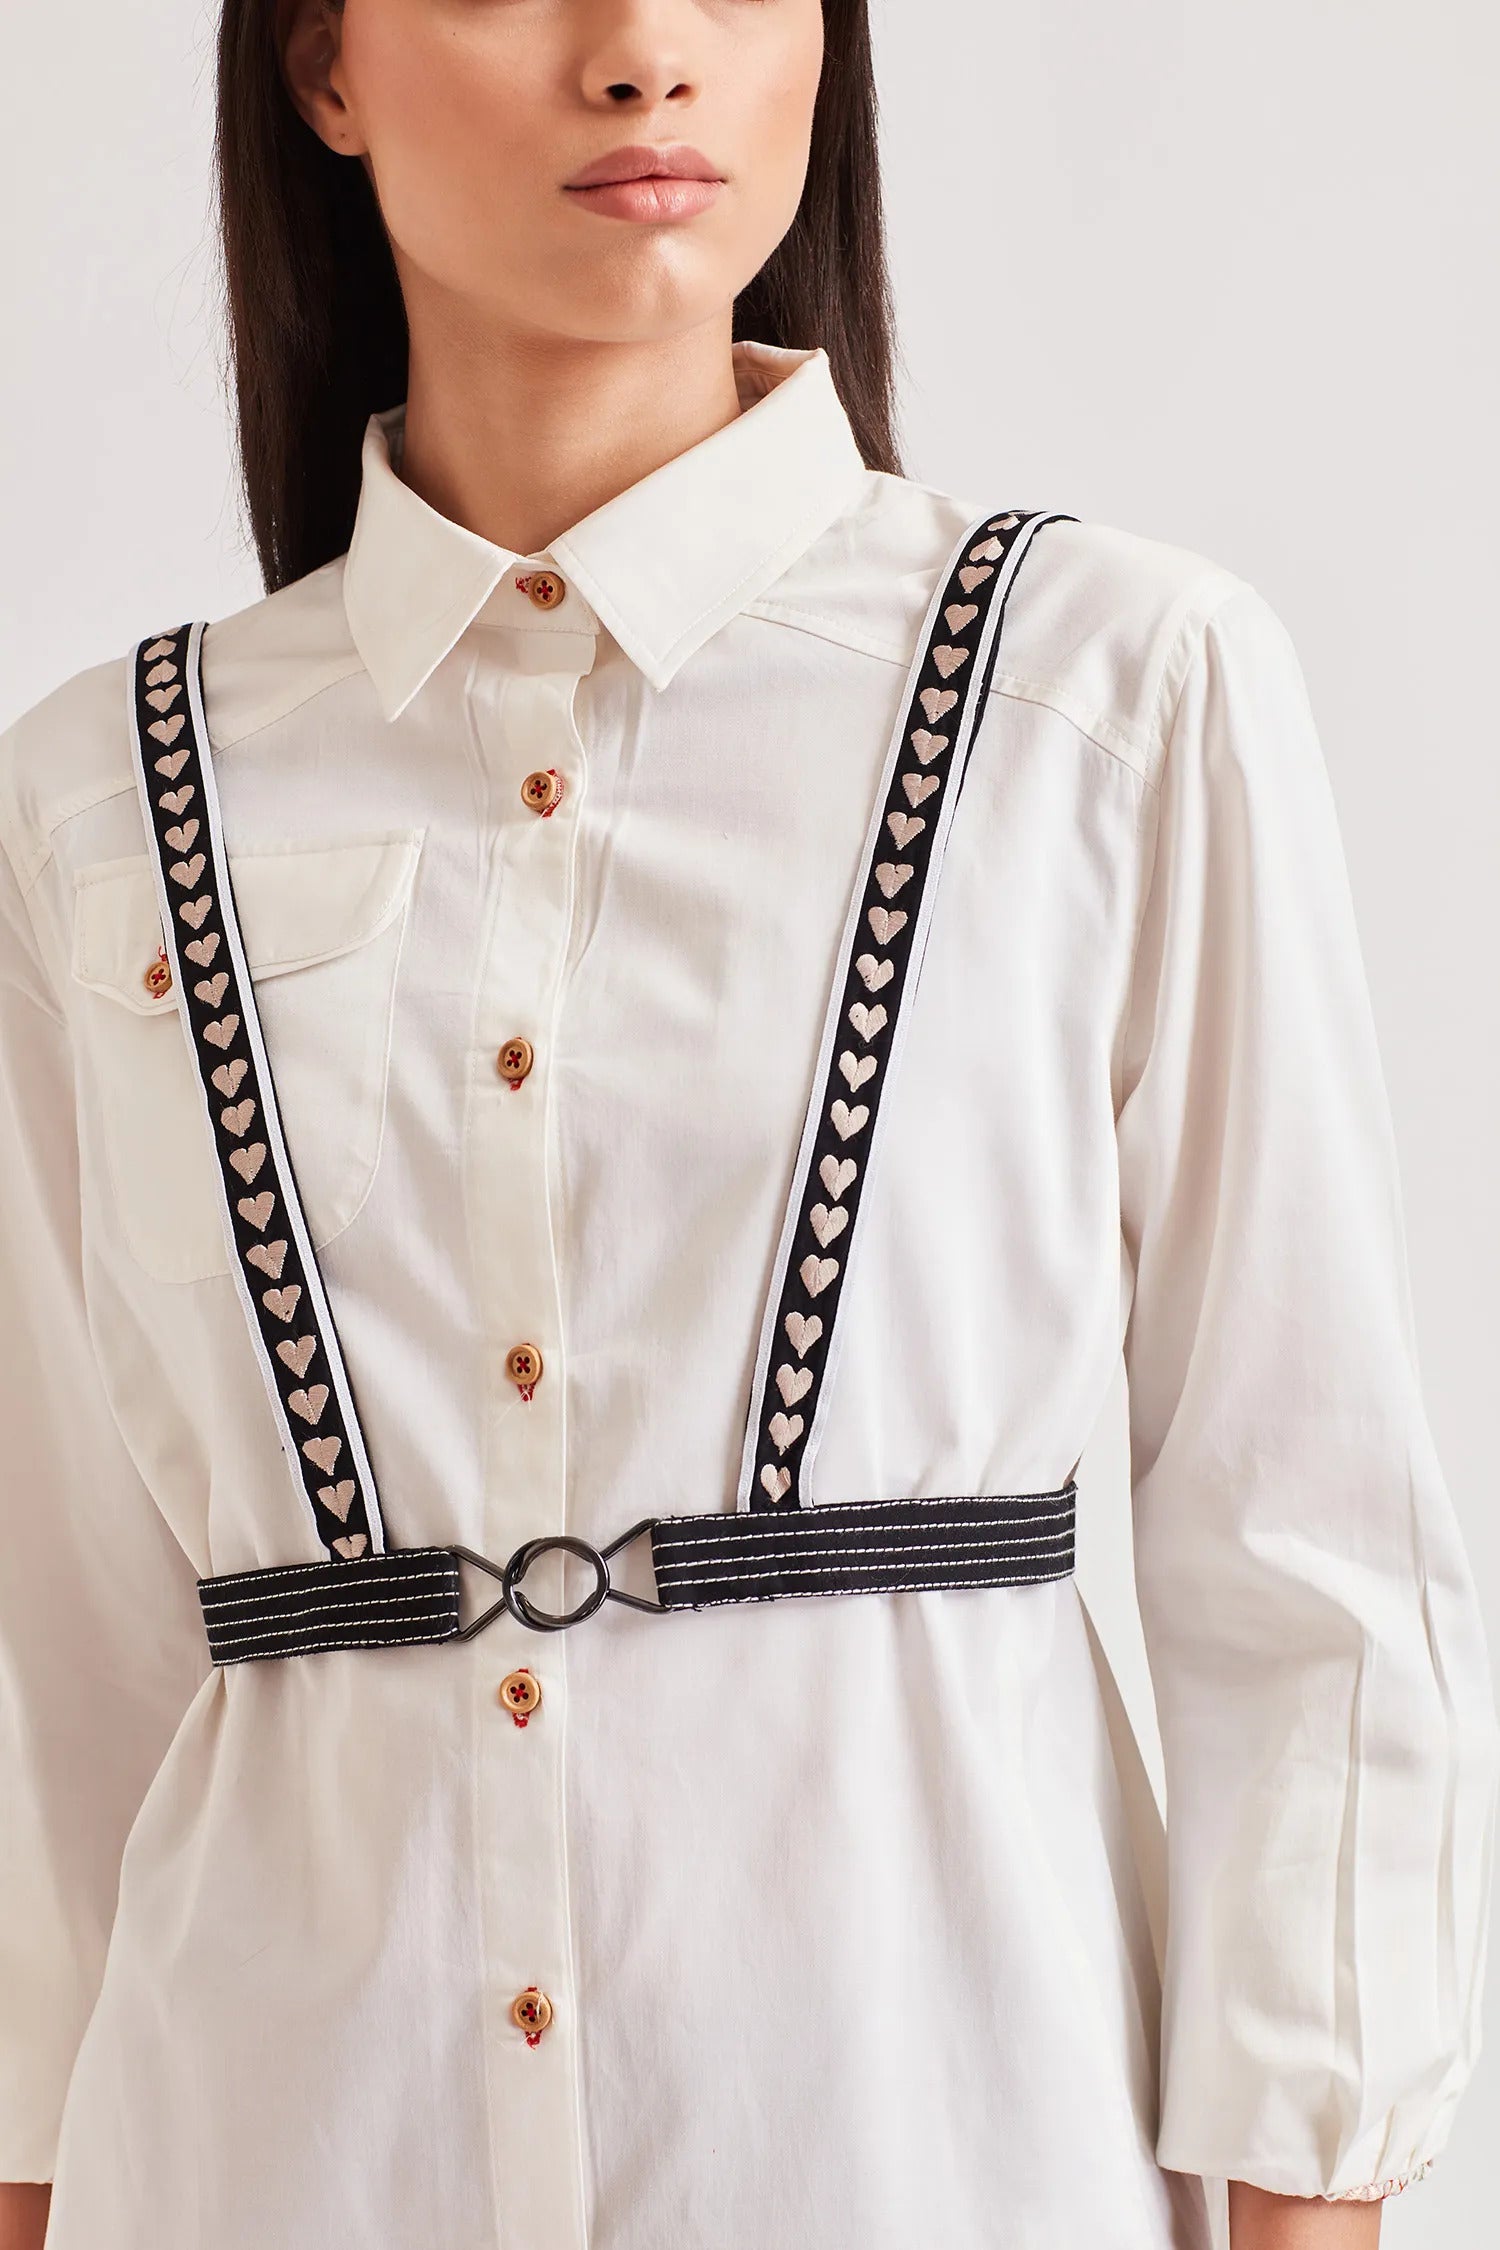 Marlot Shirt With Jacket or Belt